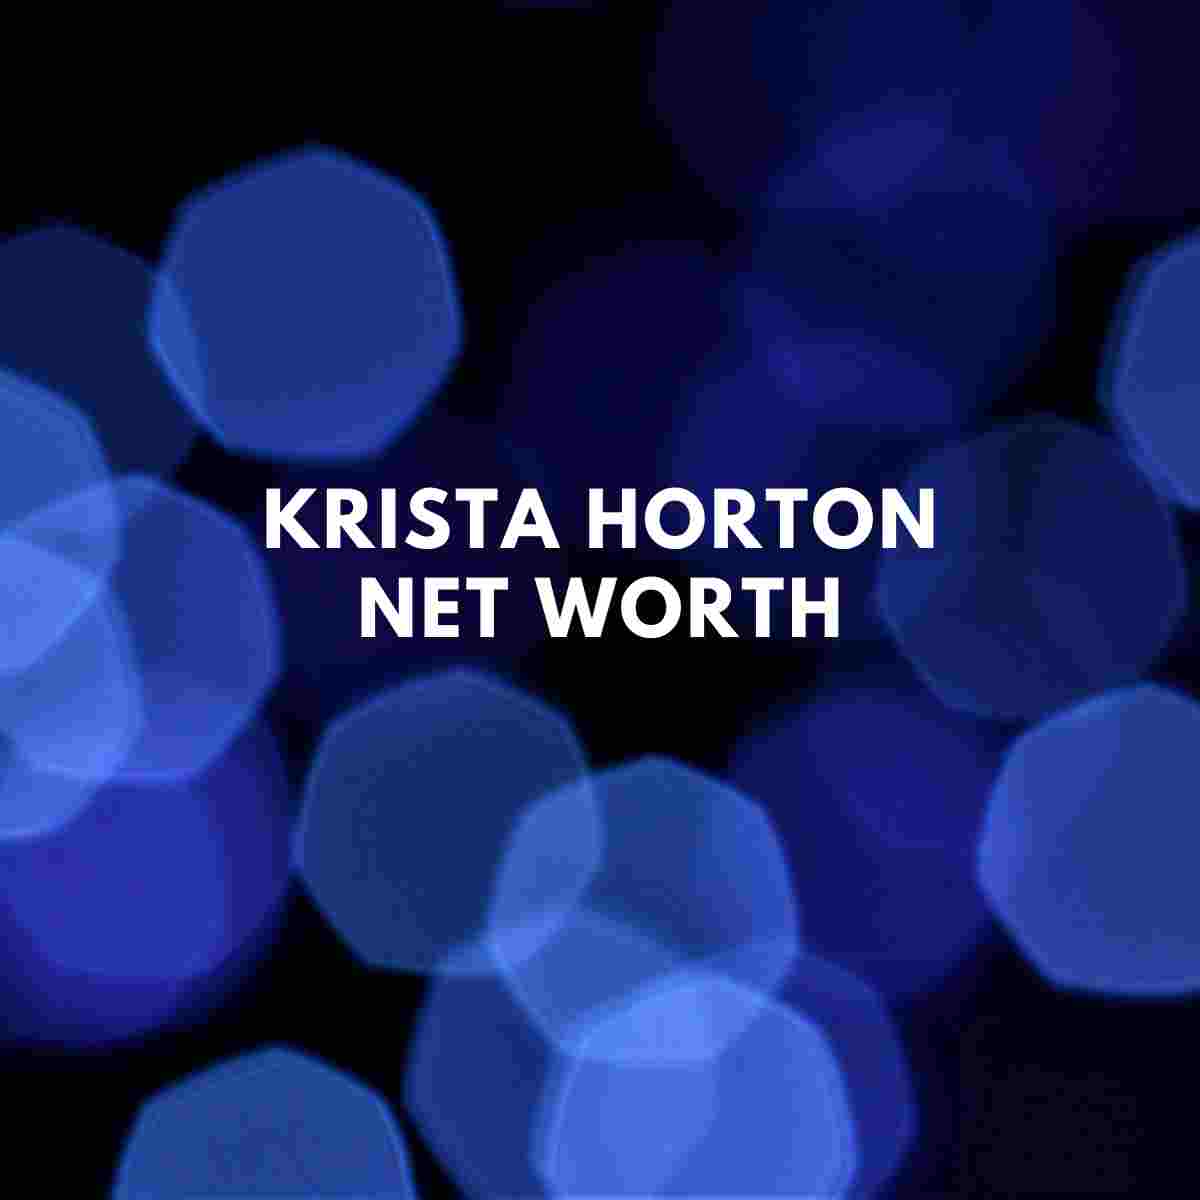 Krista Horton net worth